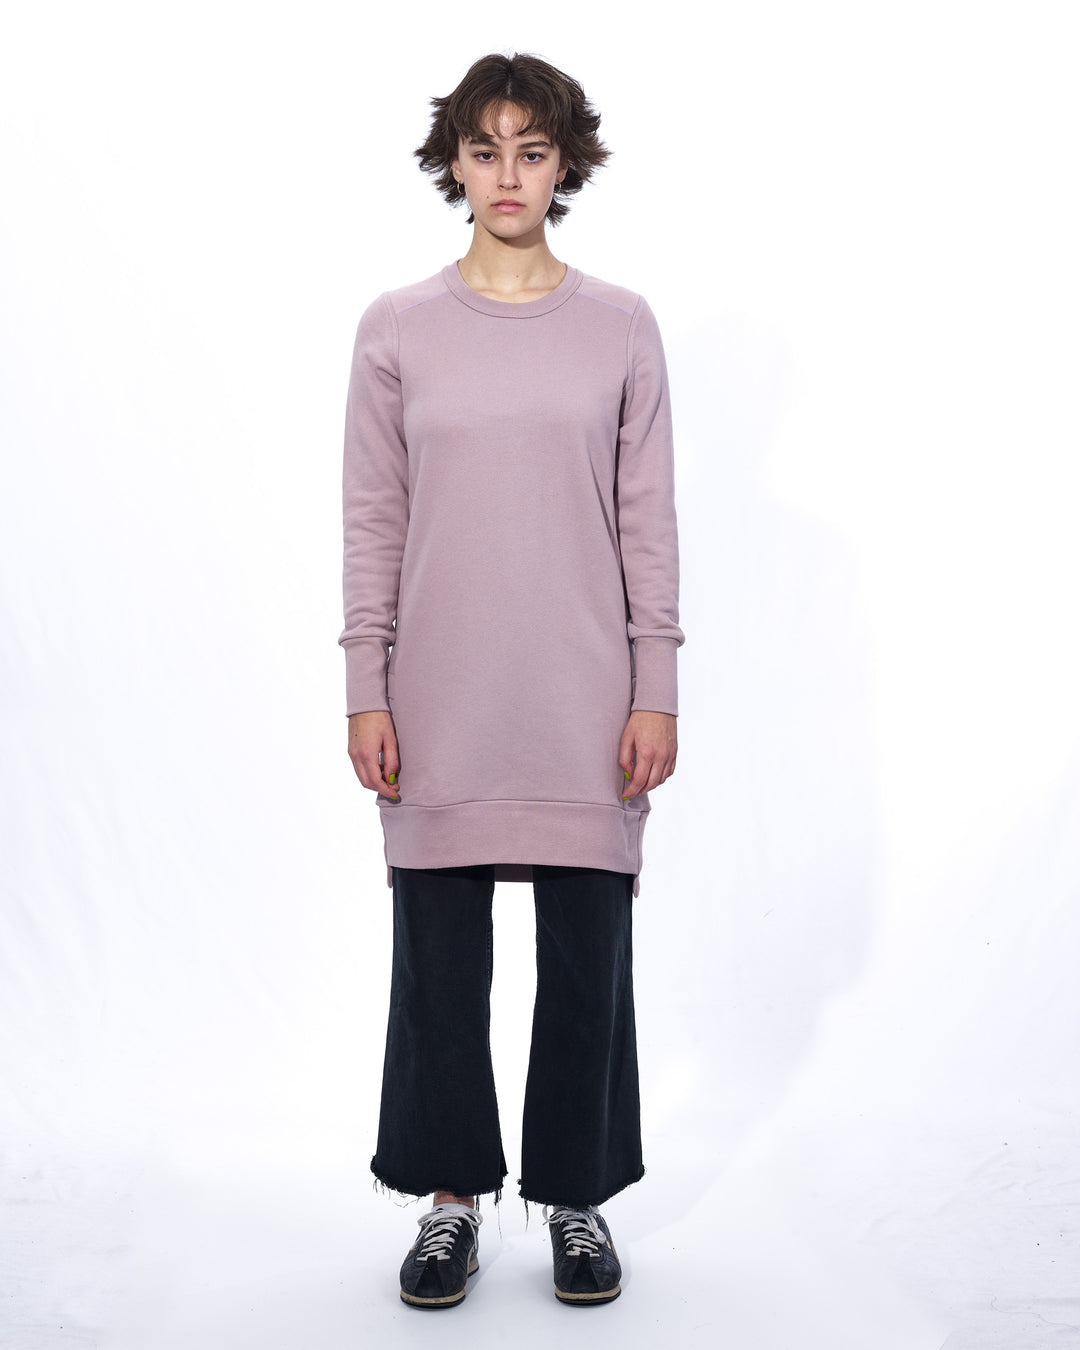 Women’s Printed Long Sleeves 100% Cotton Kurti Tunic tops – 1033-L 